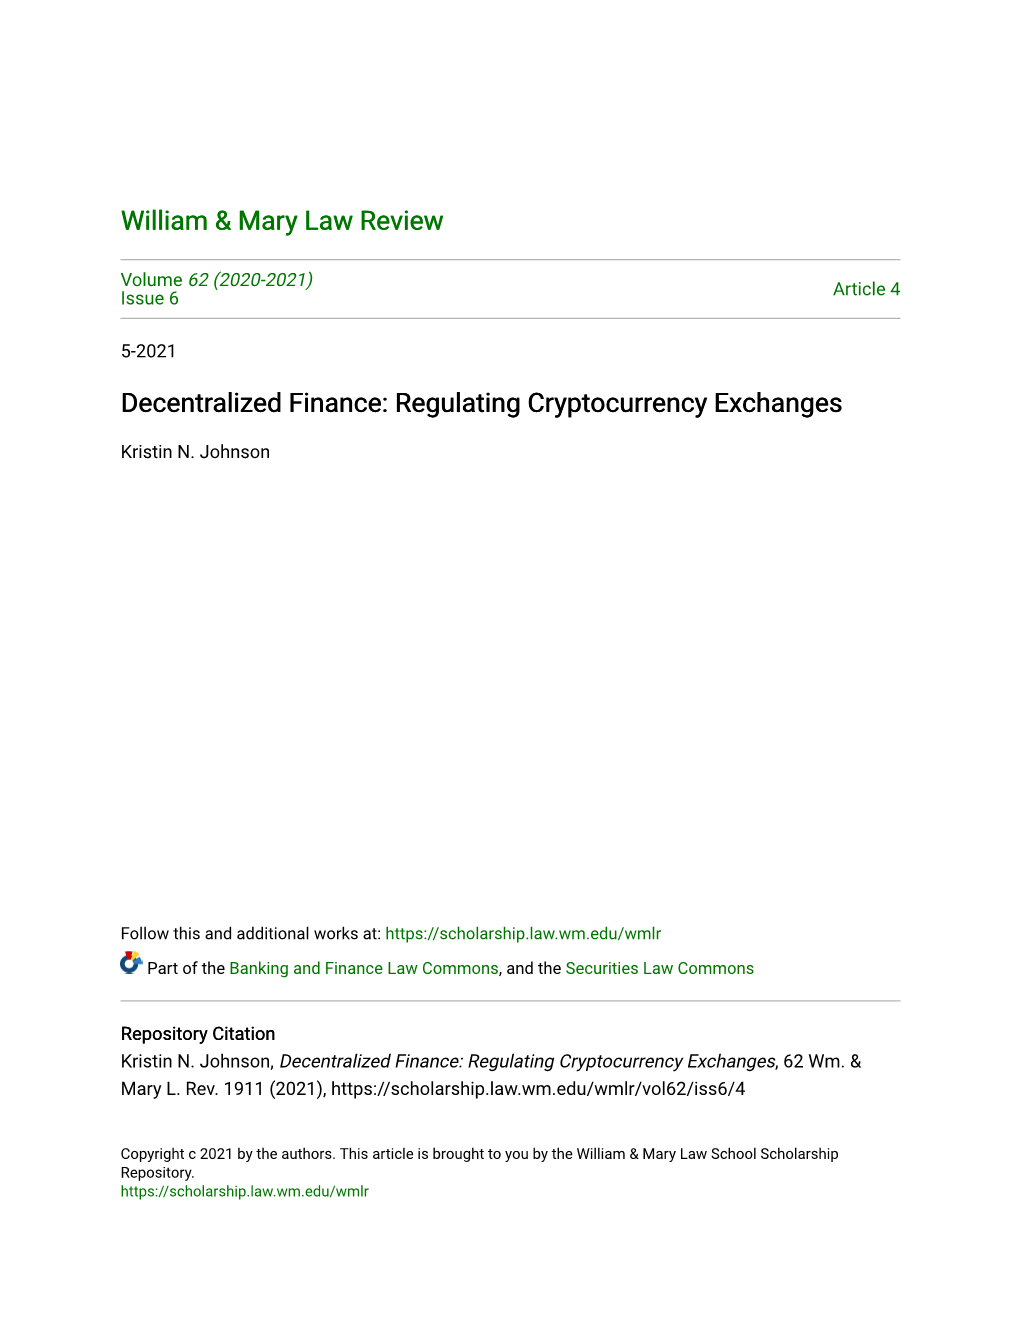 Regulating Cryptocurrency Exchanges